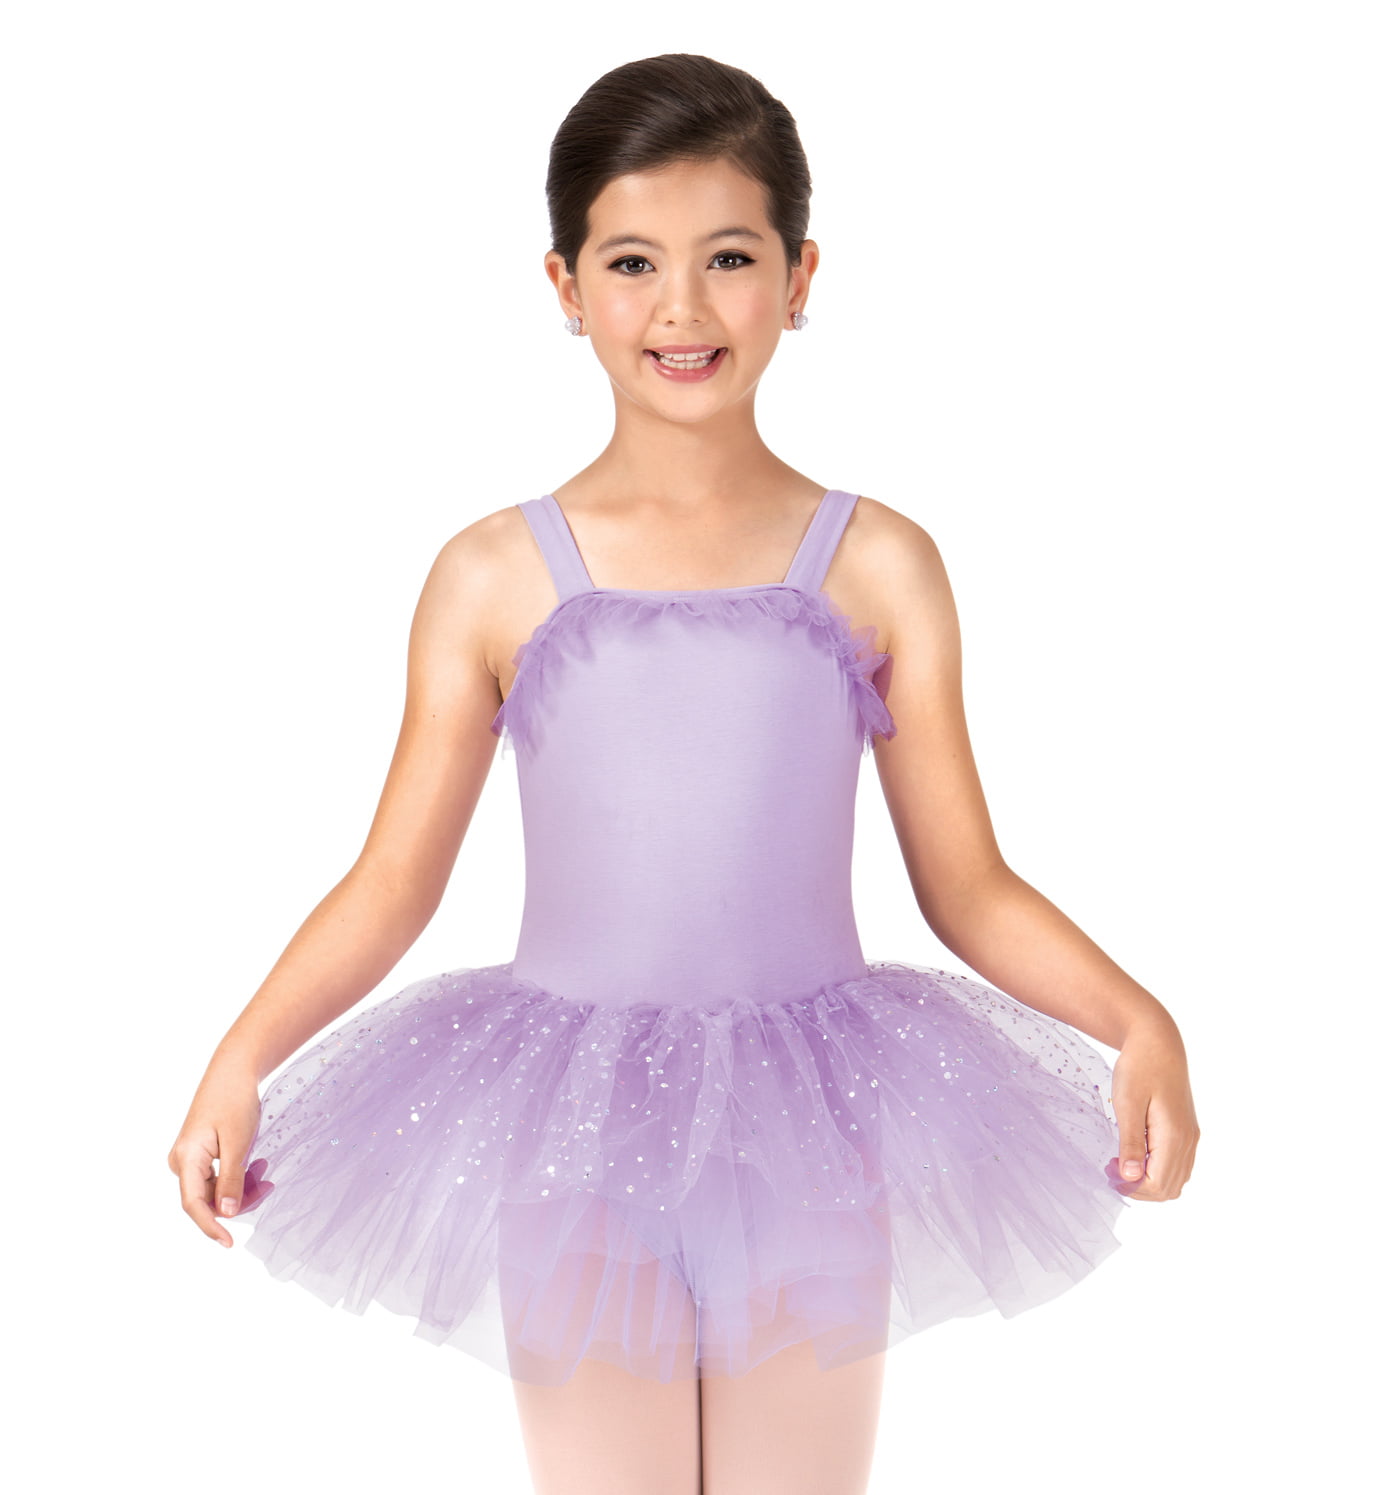 25 Packs, Lavender Rush Dance Princess Ballet Fairy Party Sequin Tutus Skirt Costume Favors Set